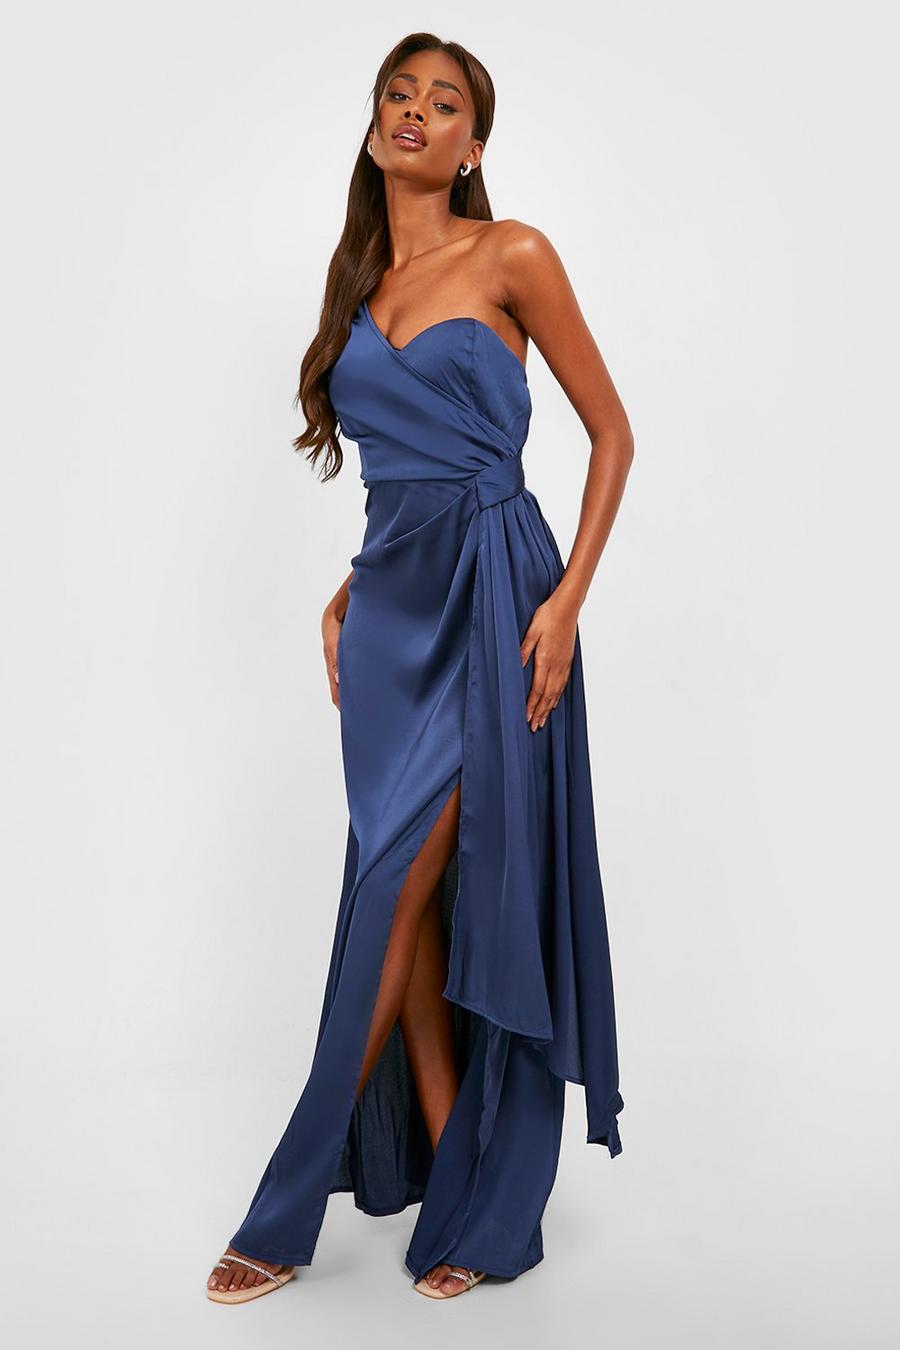 Slate Blue Satin Dress - Pleated Maxi Dress - One-Shoulder Dress